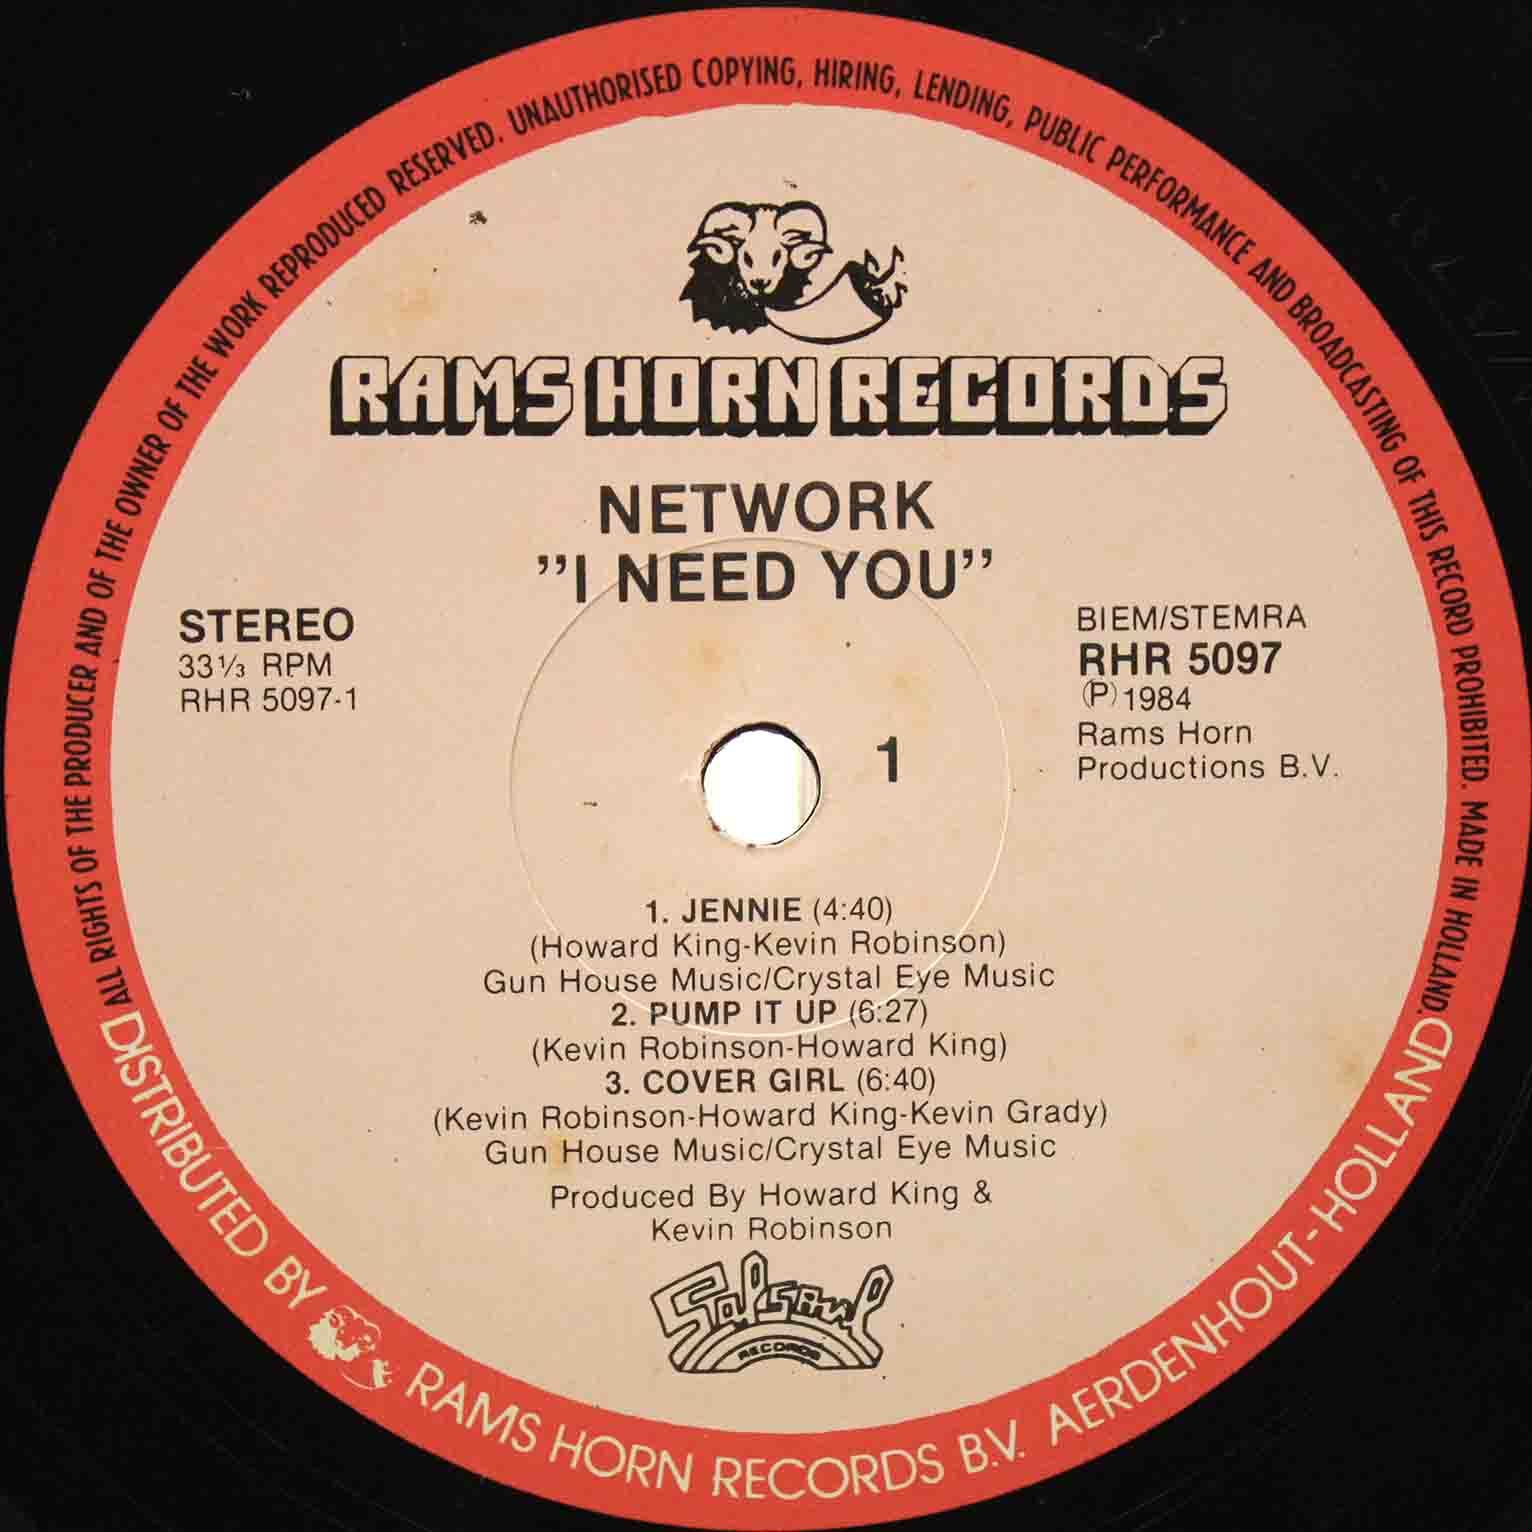 Network I Need You 03